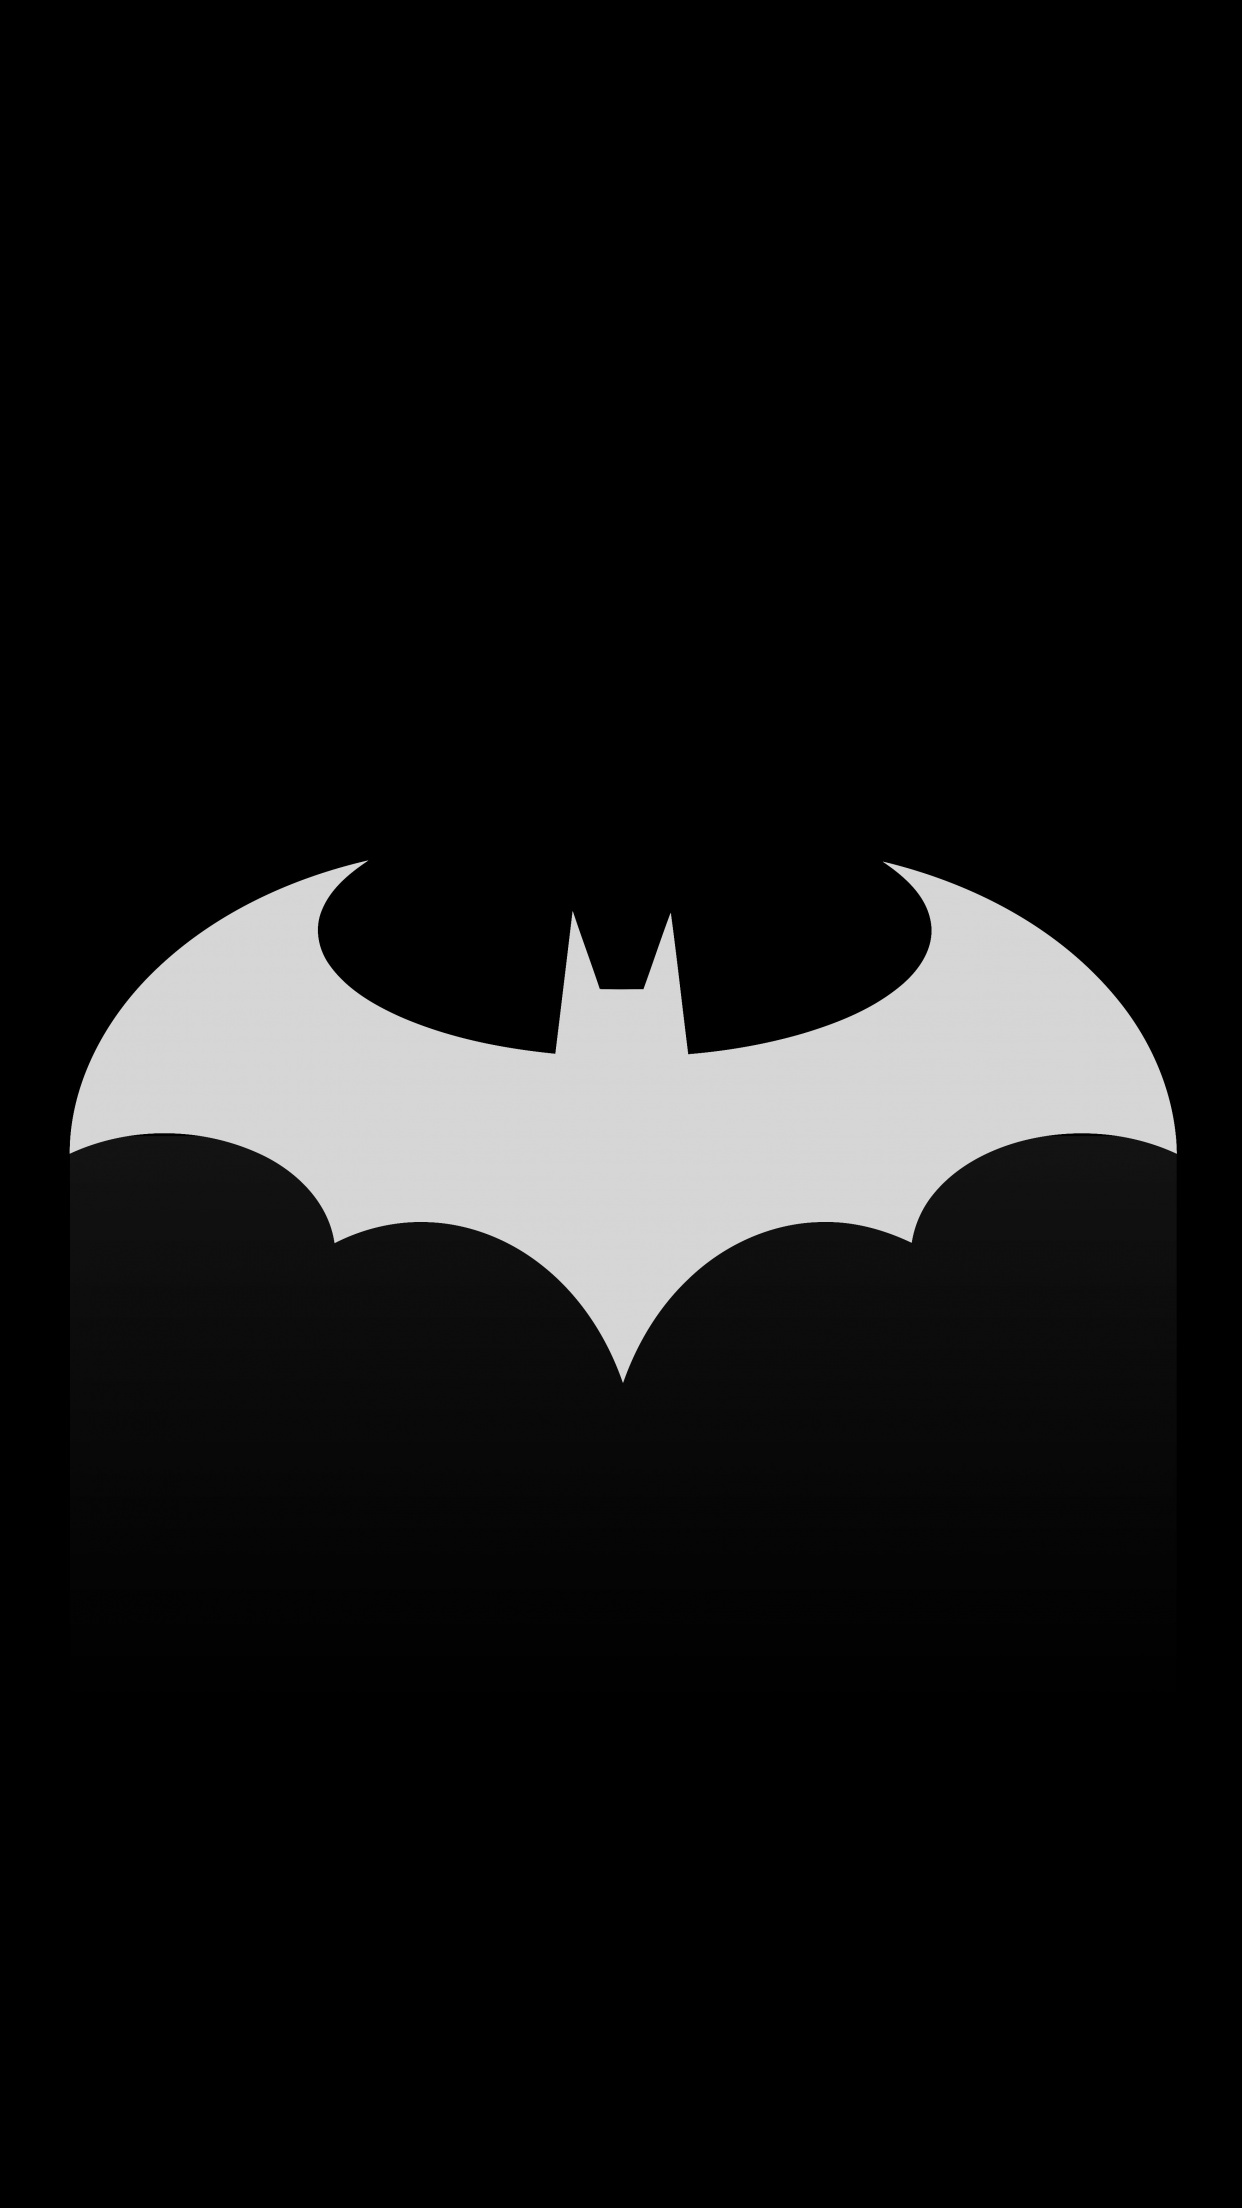 The Batman 4k IPhone Wallpaper - IPhone Wallpapers : iPhone Wallpapers